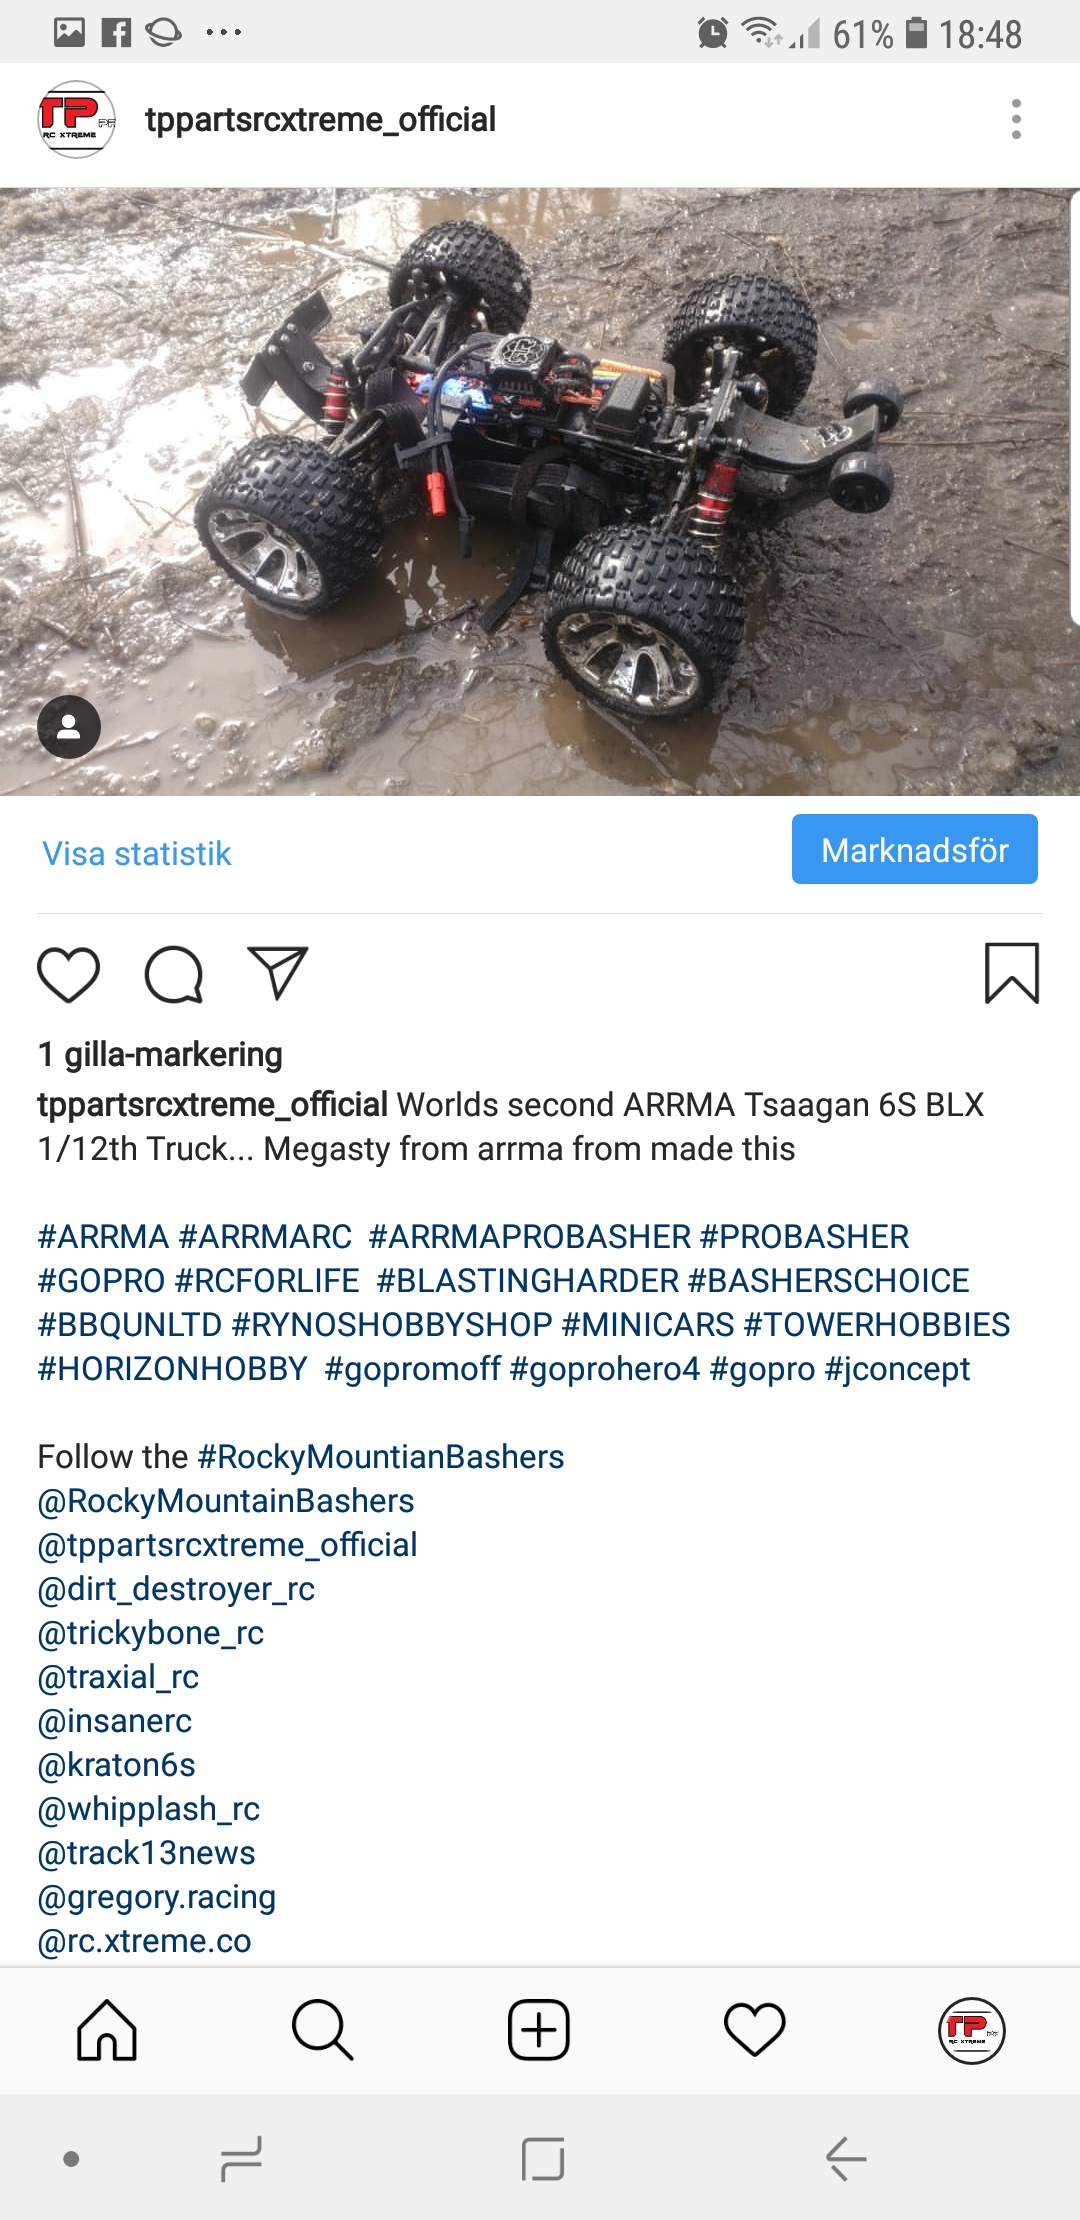 ARRMA Tsaagan 1/12th  6s BLX - Megasty Edition